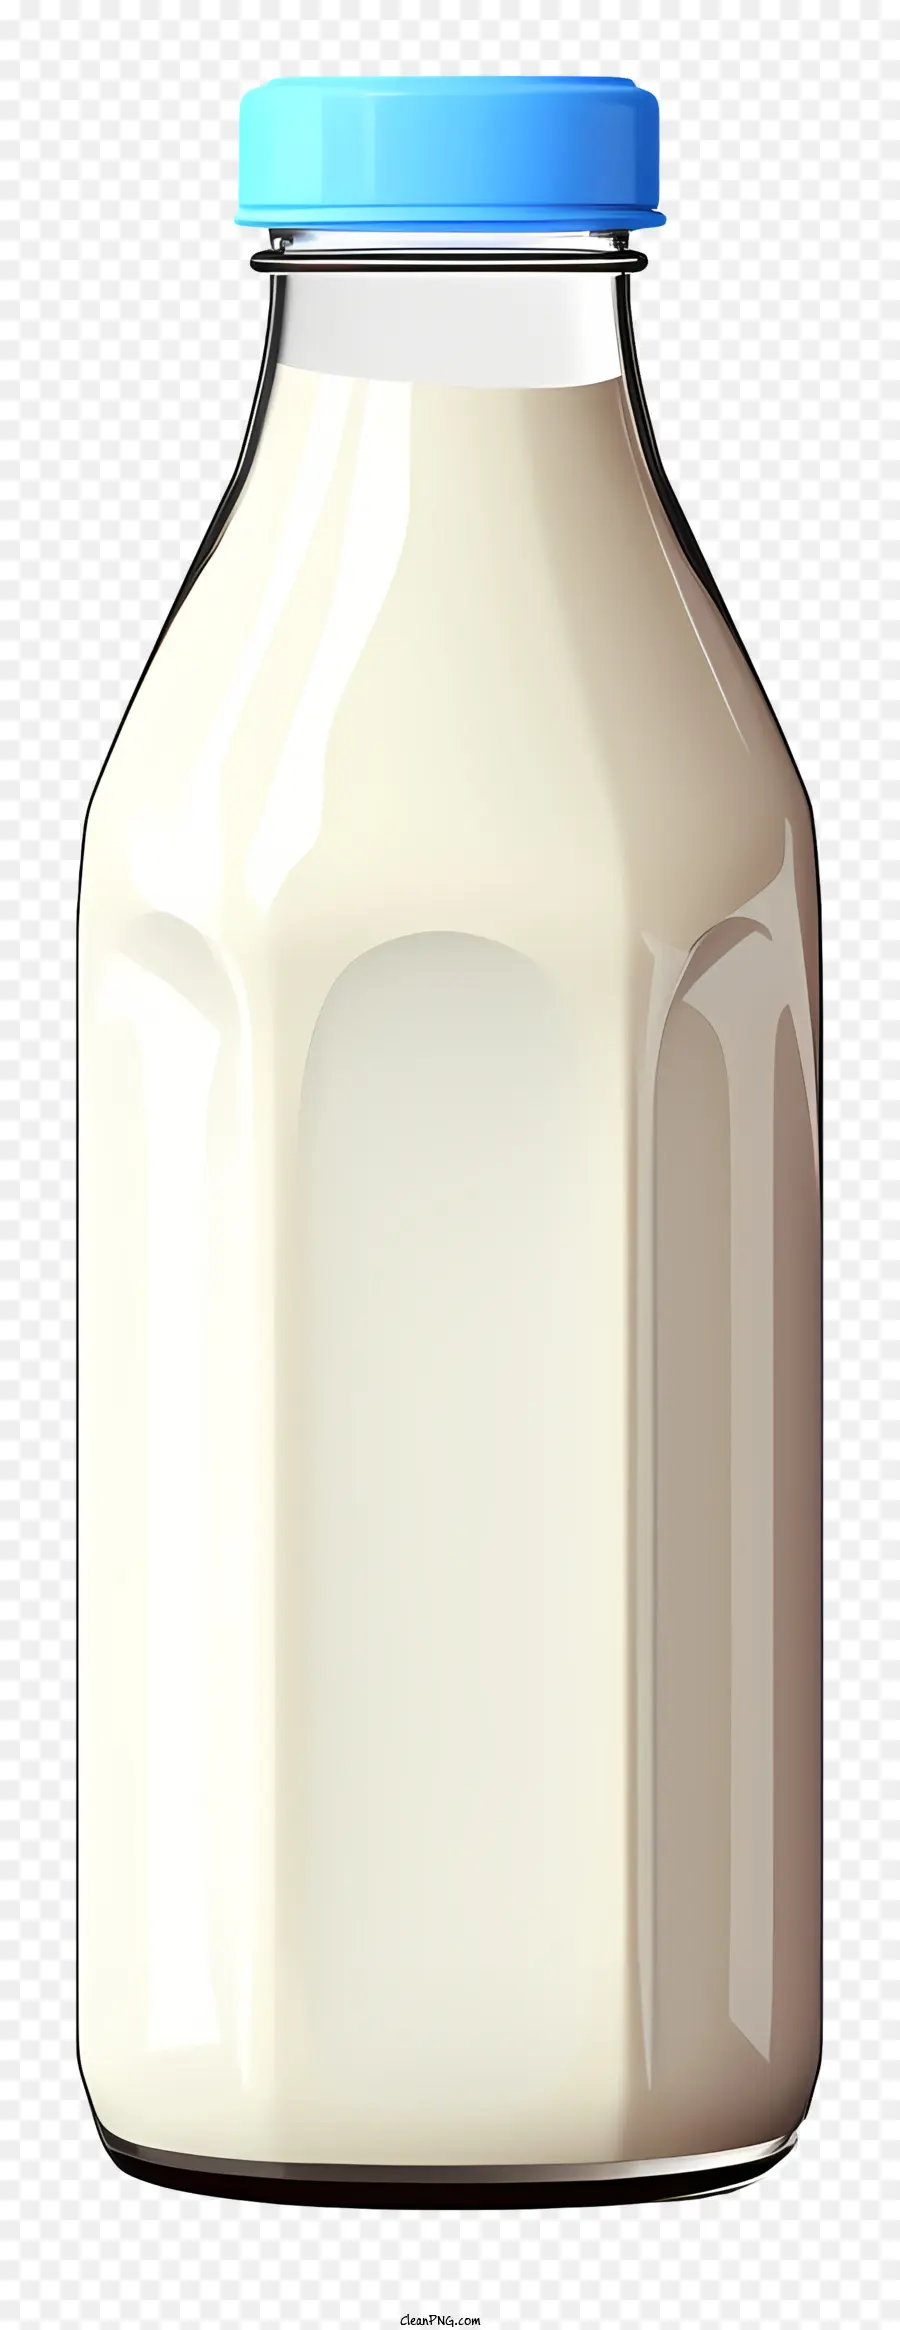 glass bottle milk blue cap black background transparent bottle